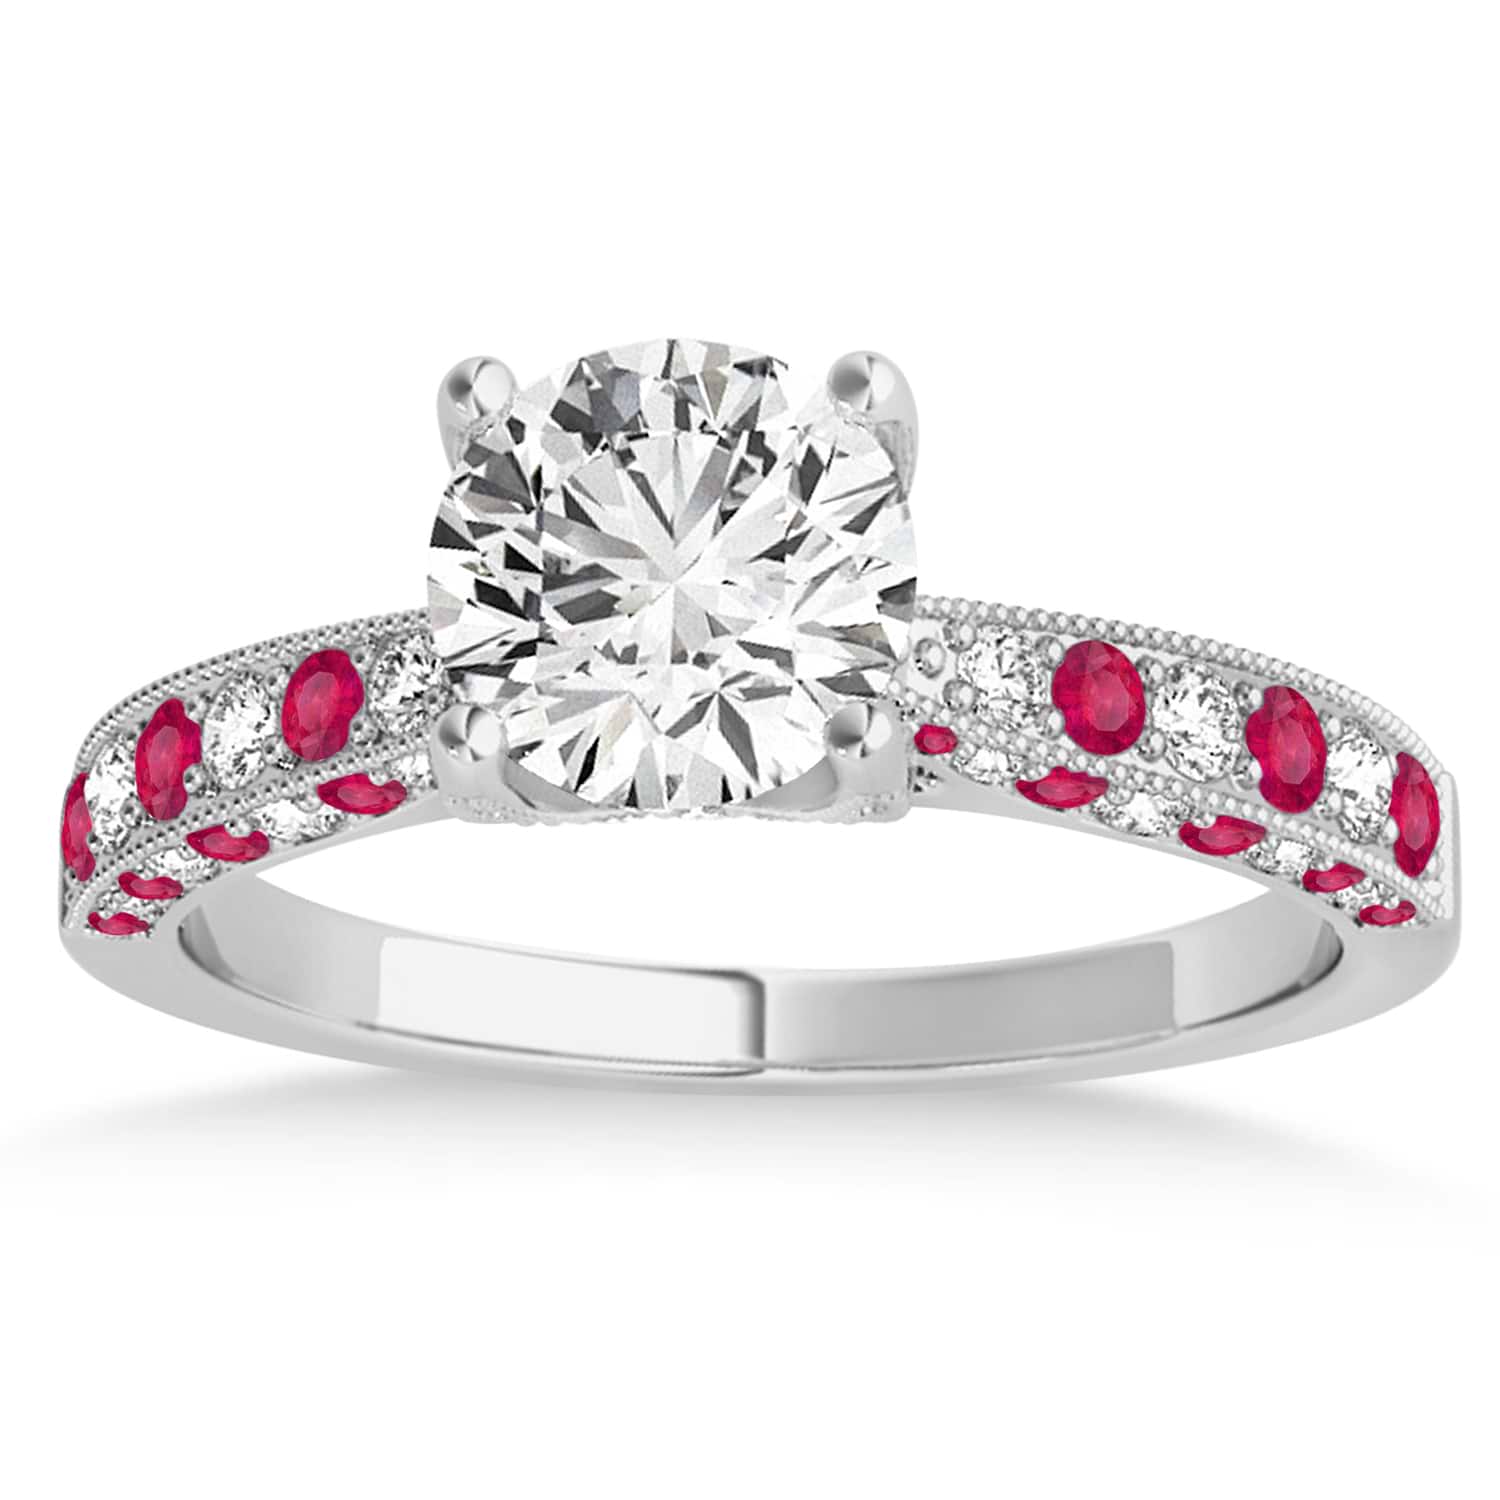 Alternating Diamond & Ruby Engravable Engagement Ring in Palladium (0.45ct)